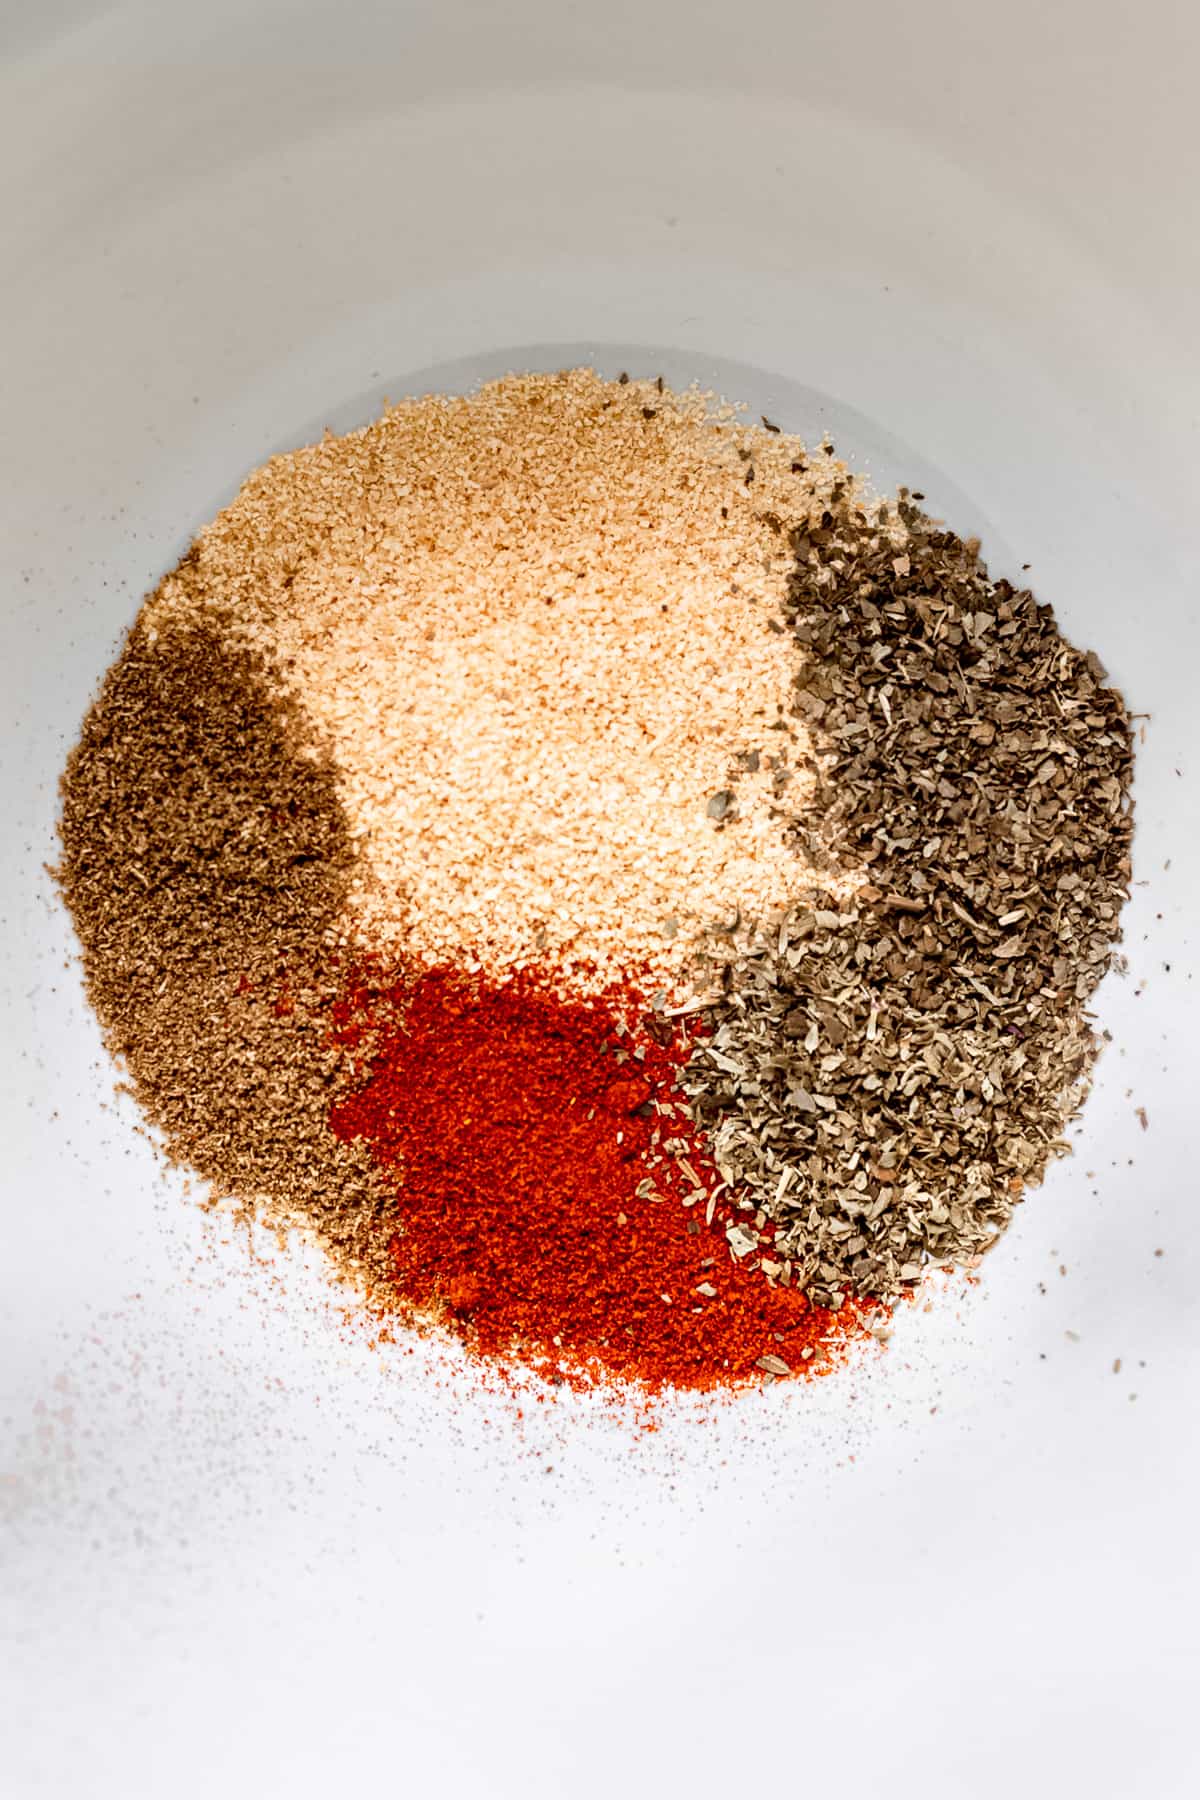 Spice rub in a white bowl.